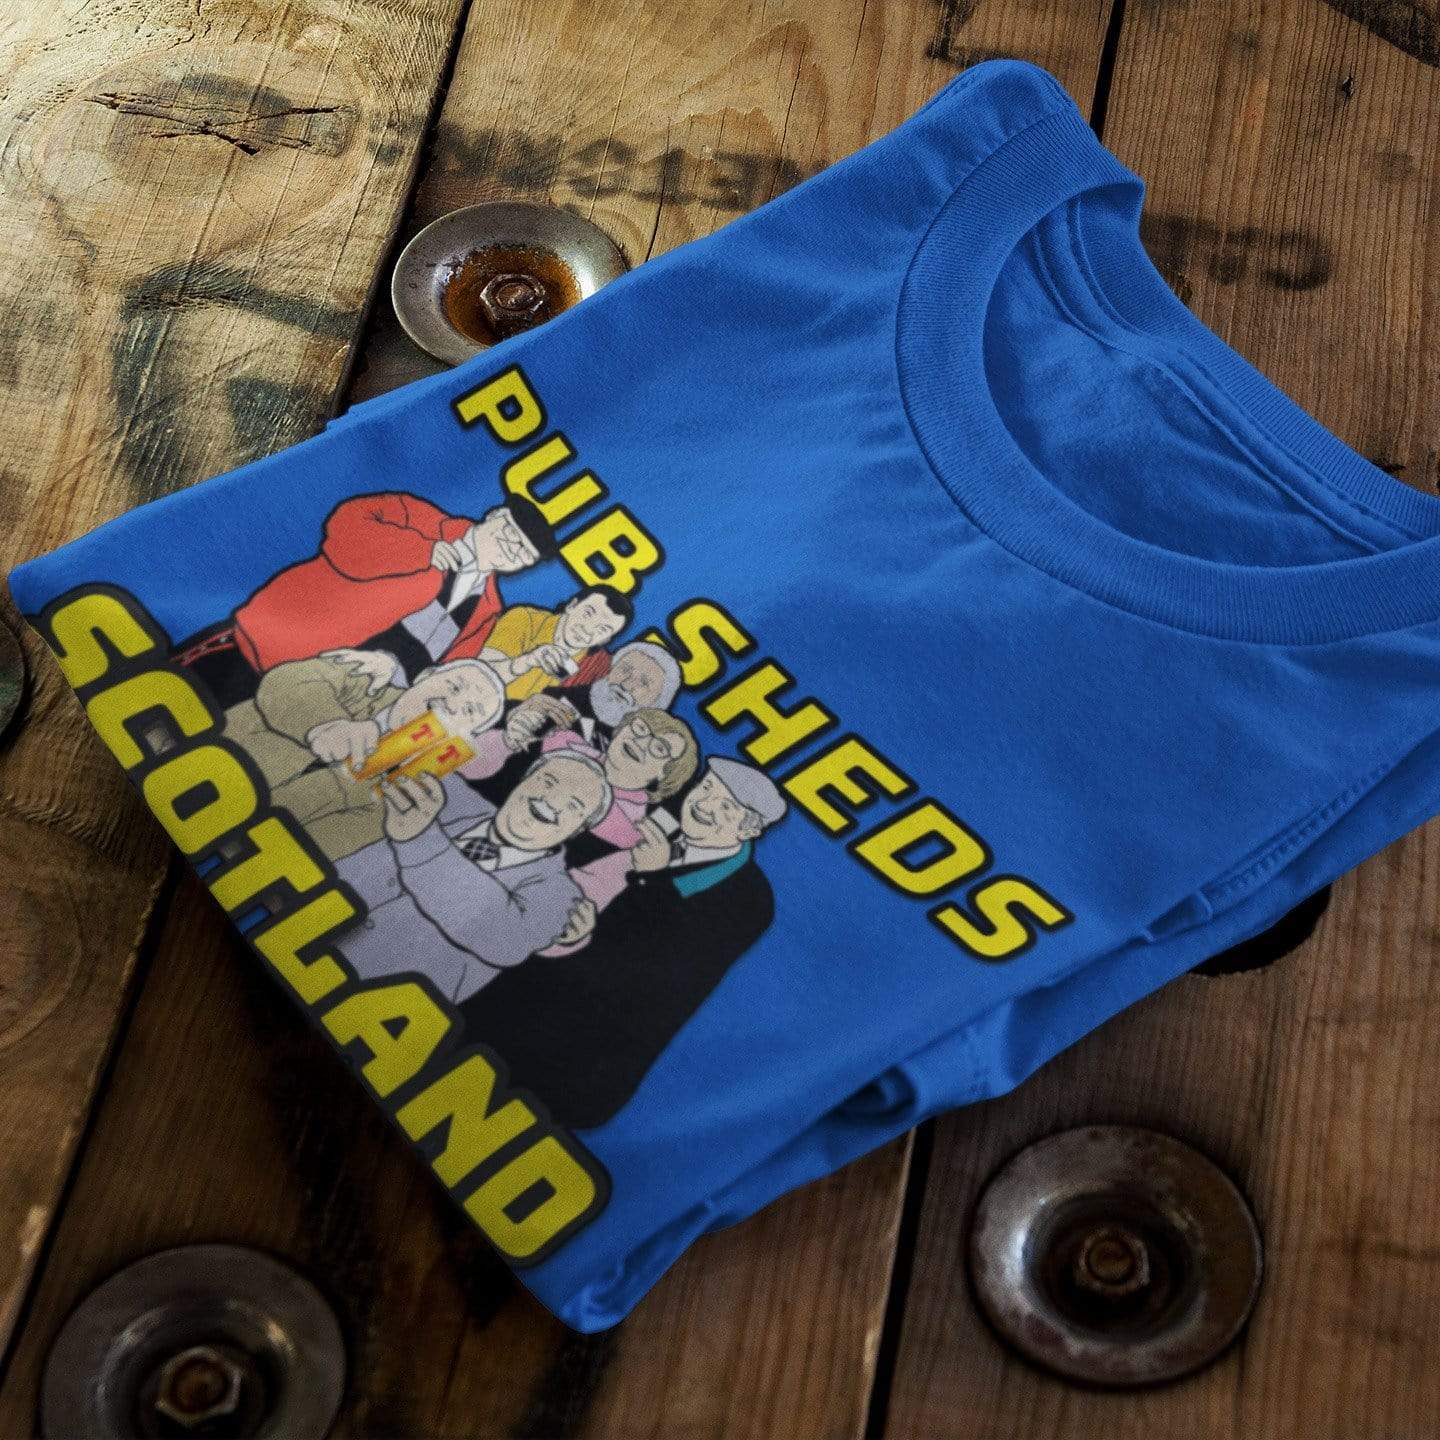 Pub Sheds Scotland Personalised T-Shirt Raise the Bar Print and Design - Raise the Bar